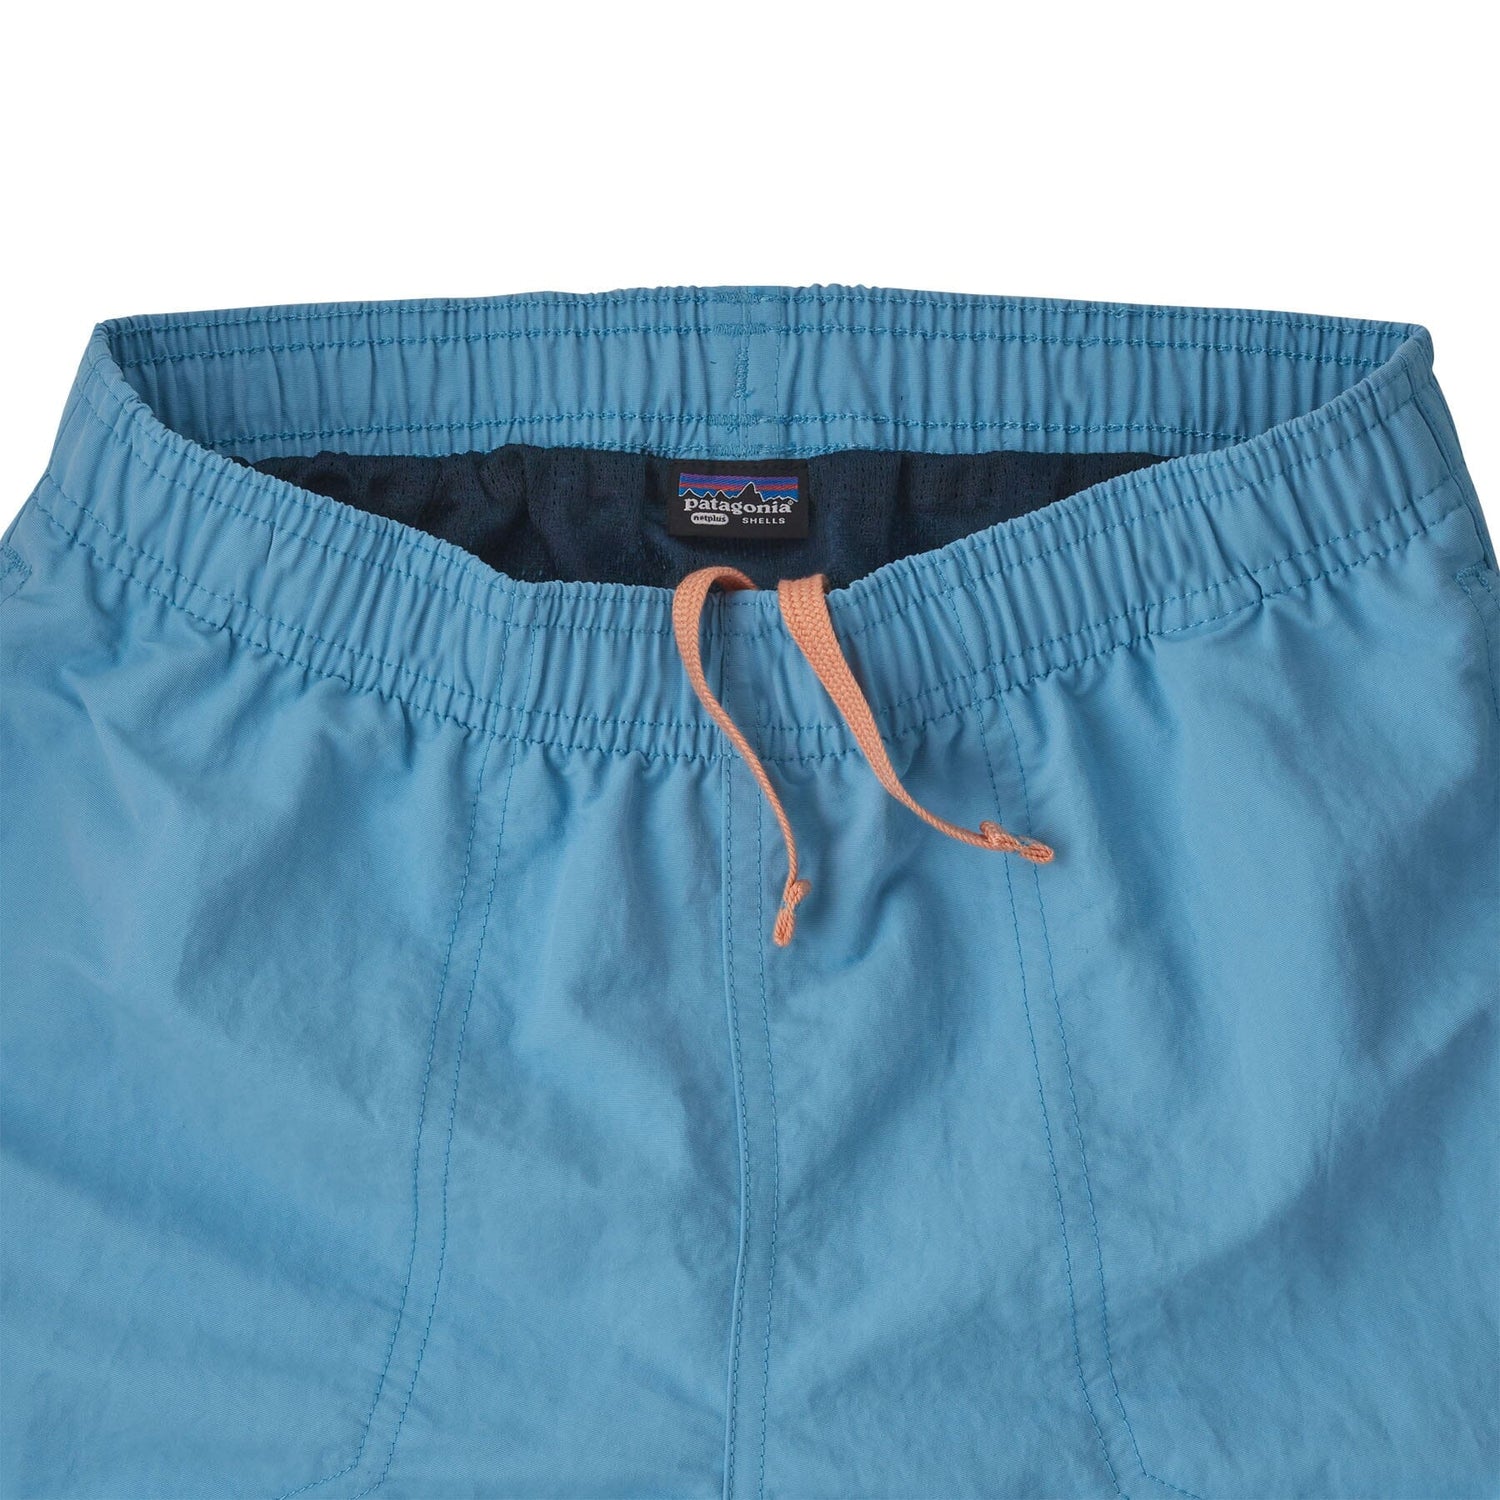 Patagonia - Kids Baggies Shorts 7 in. Lined - Recycled nylon - Weekendbee - sustainable sportswear